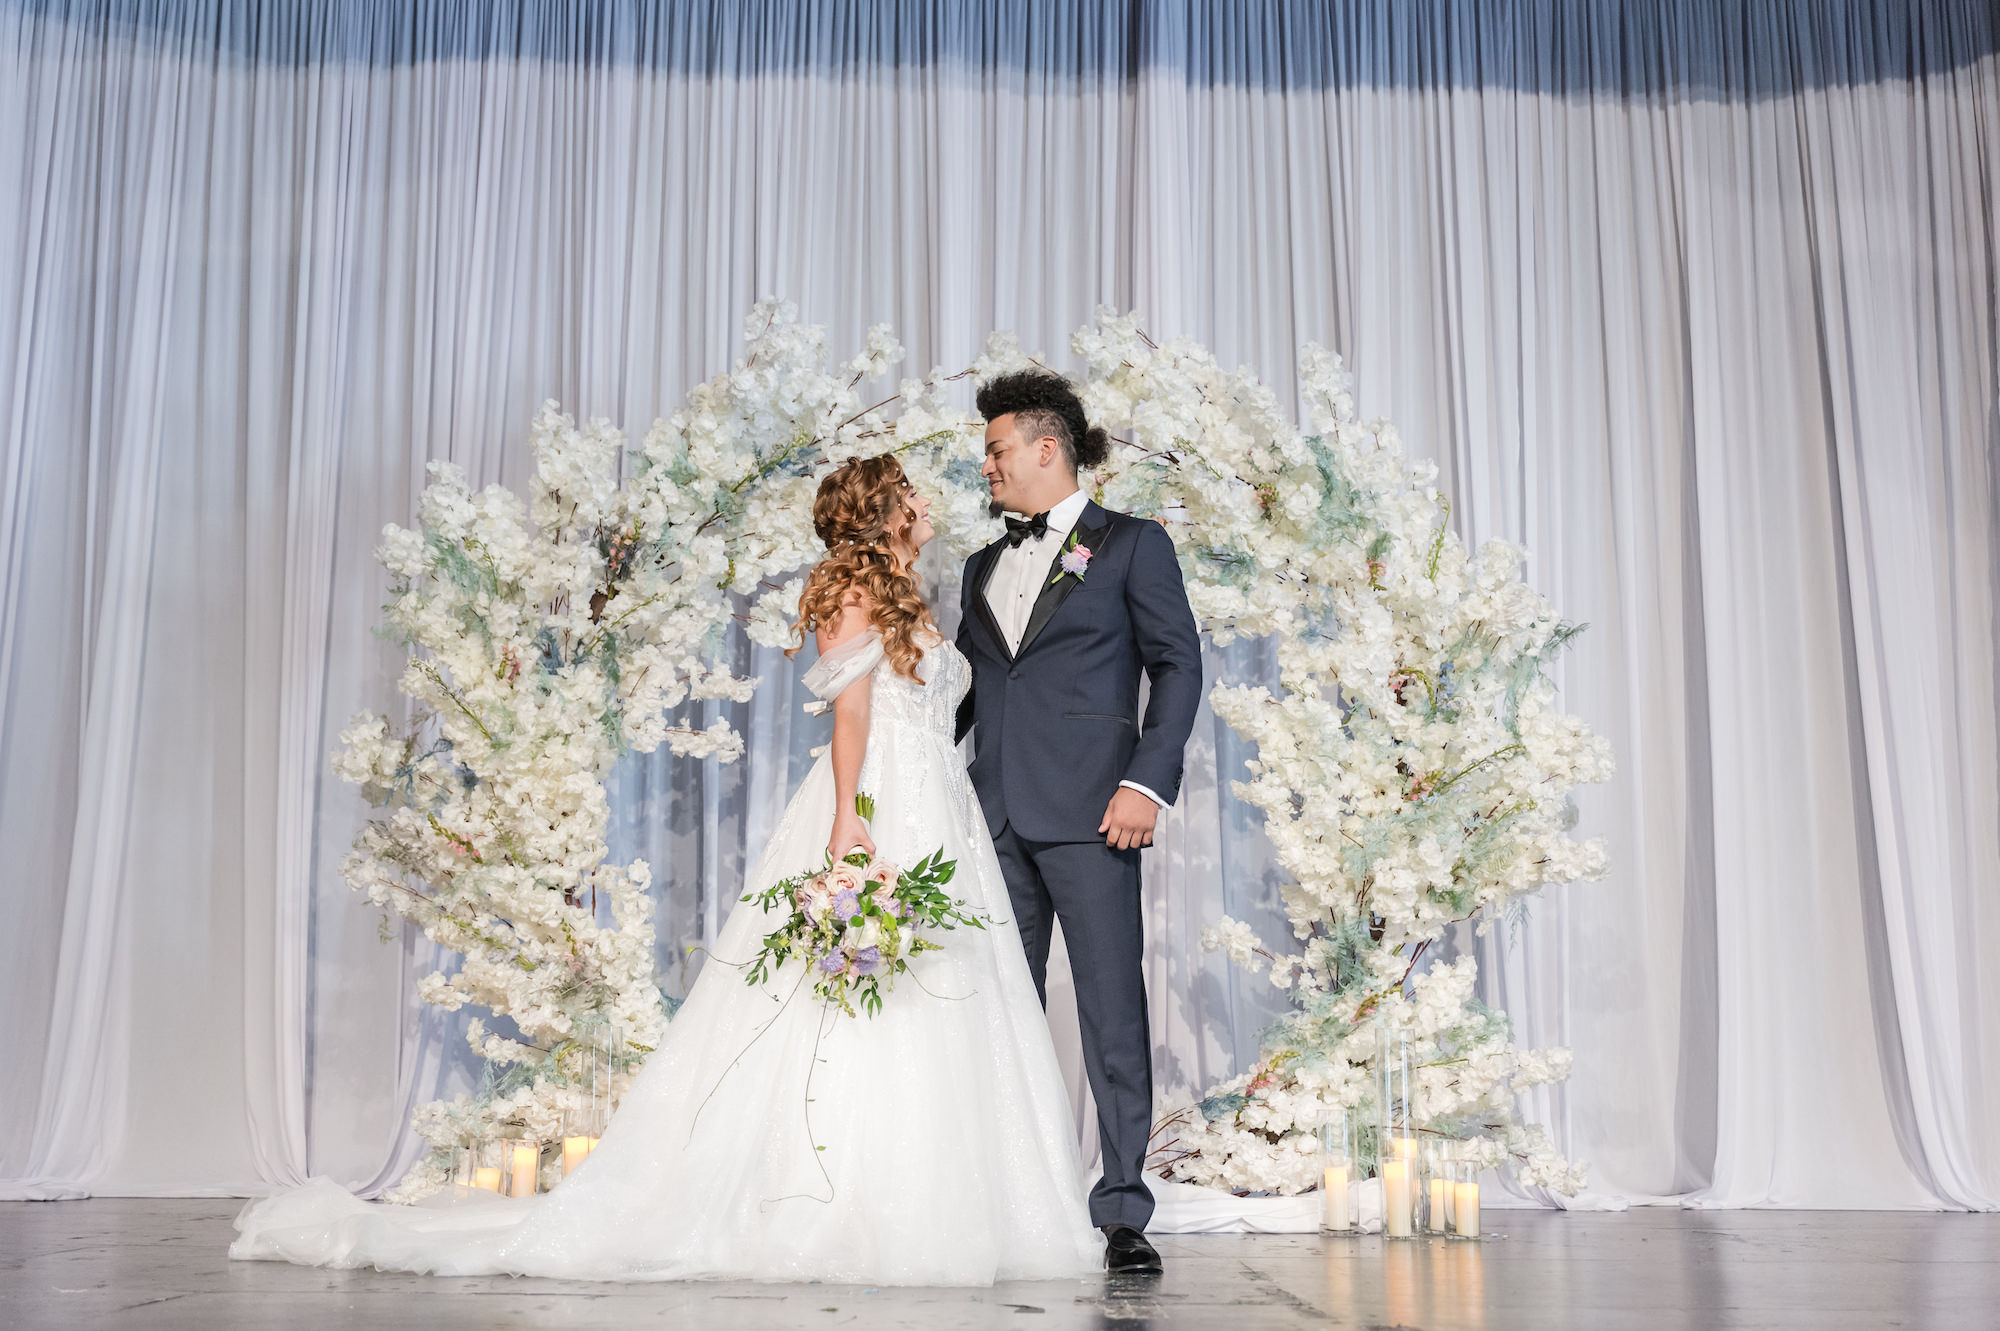 Stage Wedding Ceremony Inspiration | Round Flower Arch Ideas | Tampa Florist Save the Date Florida | Planner EventFull Weddings | Amanda Zabrocki Photography